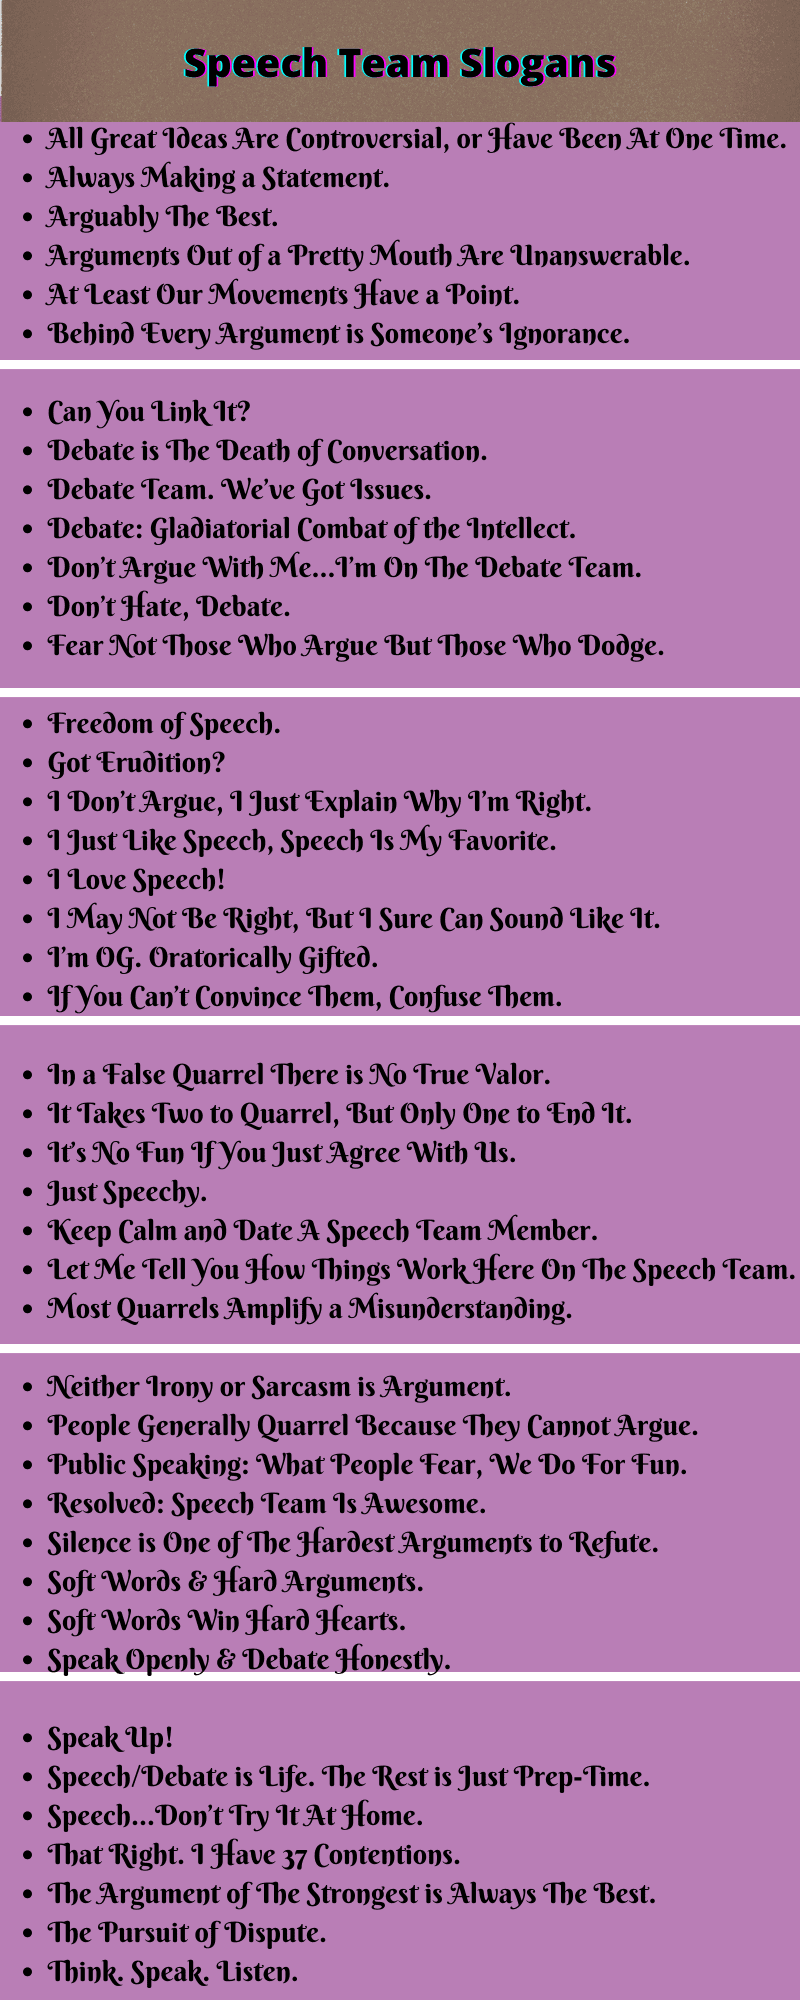 Speech Team Slogans